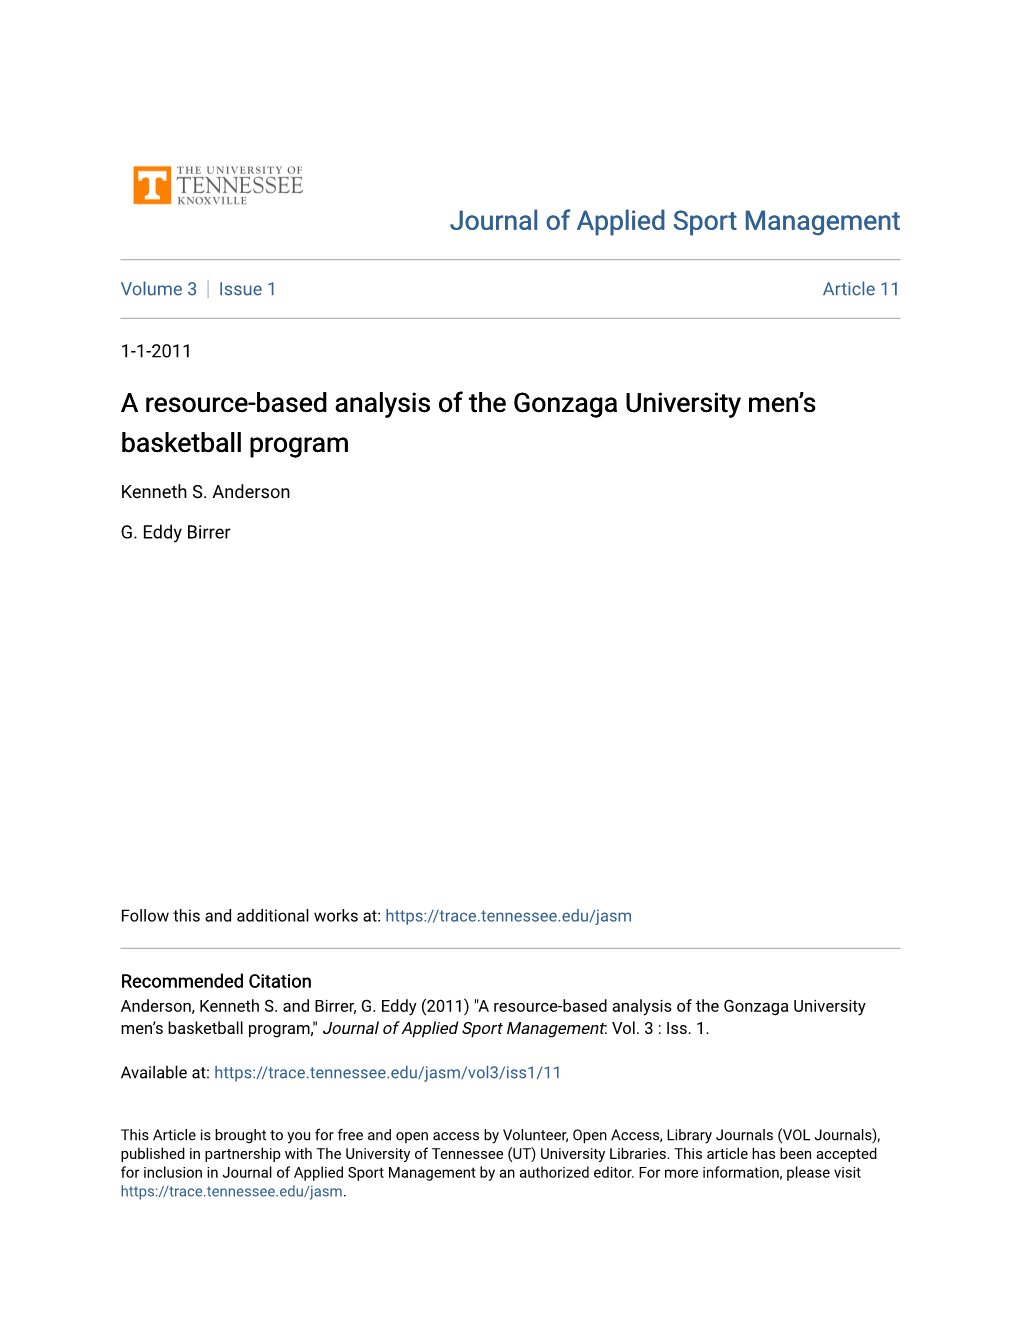 A Resource-Based Analysis of the Gonzaga University Men's